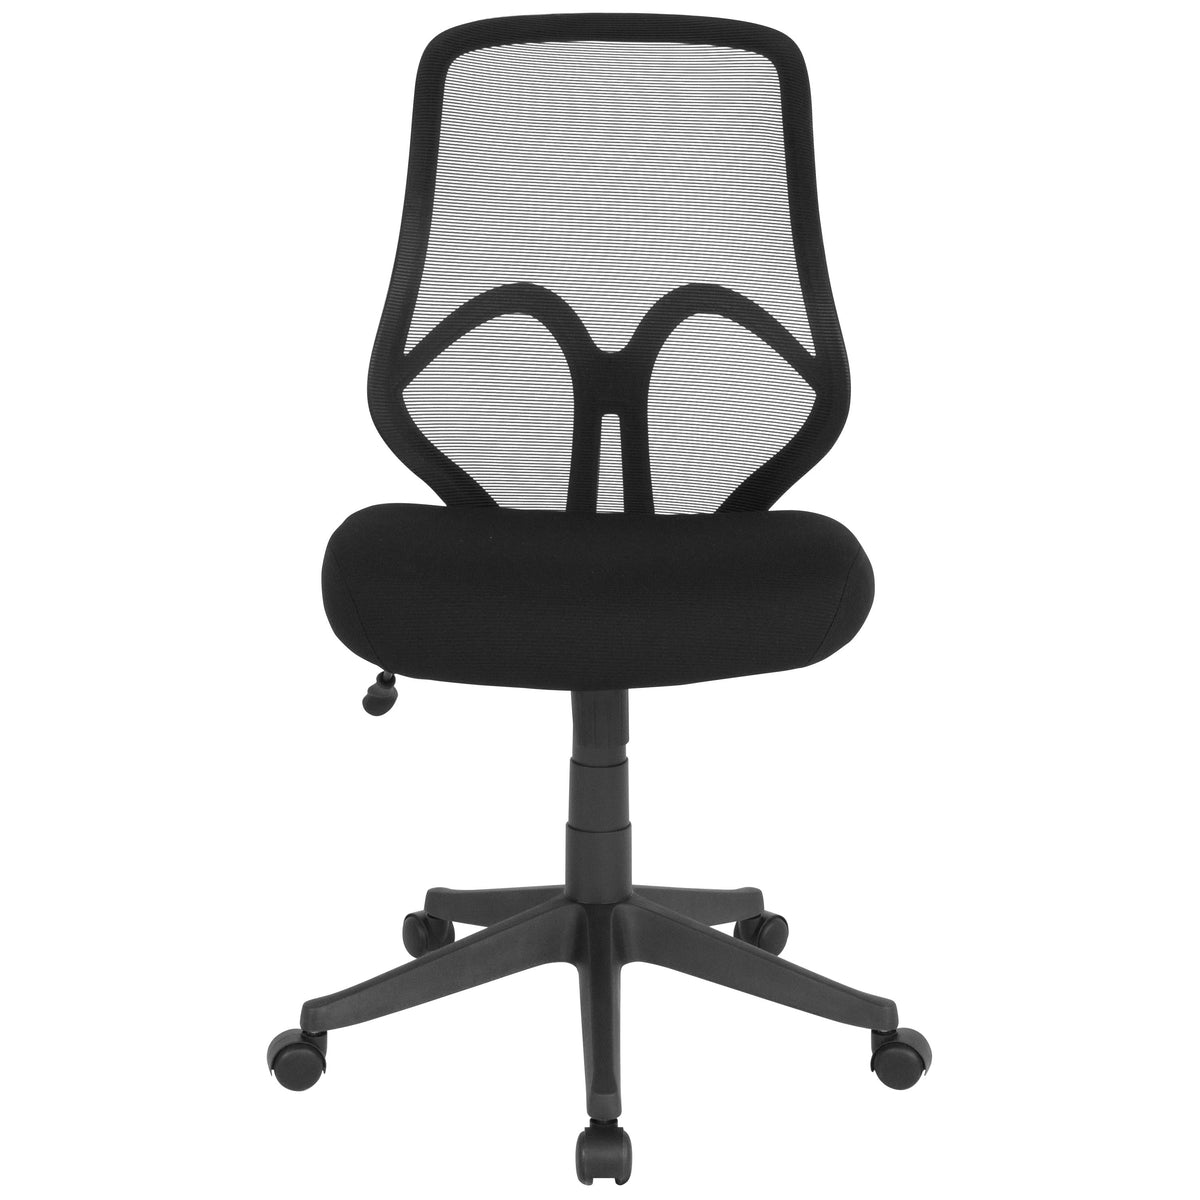 Black |#| High Back Black Mesh Office Chair - Computer Chair - Swivel Task Chair